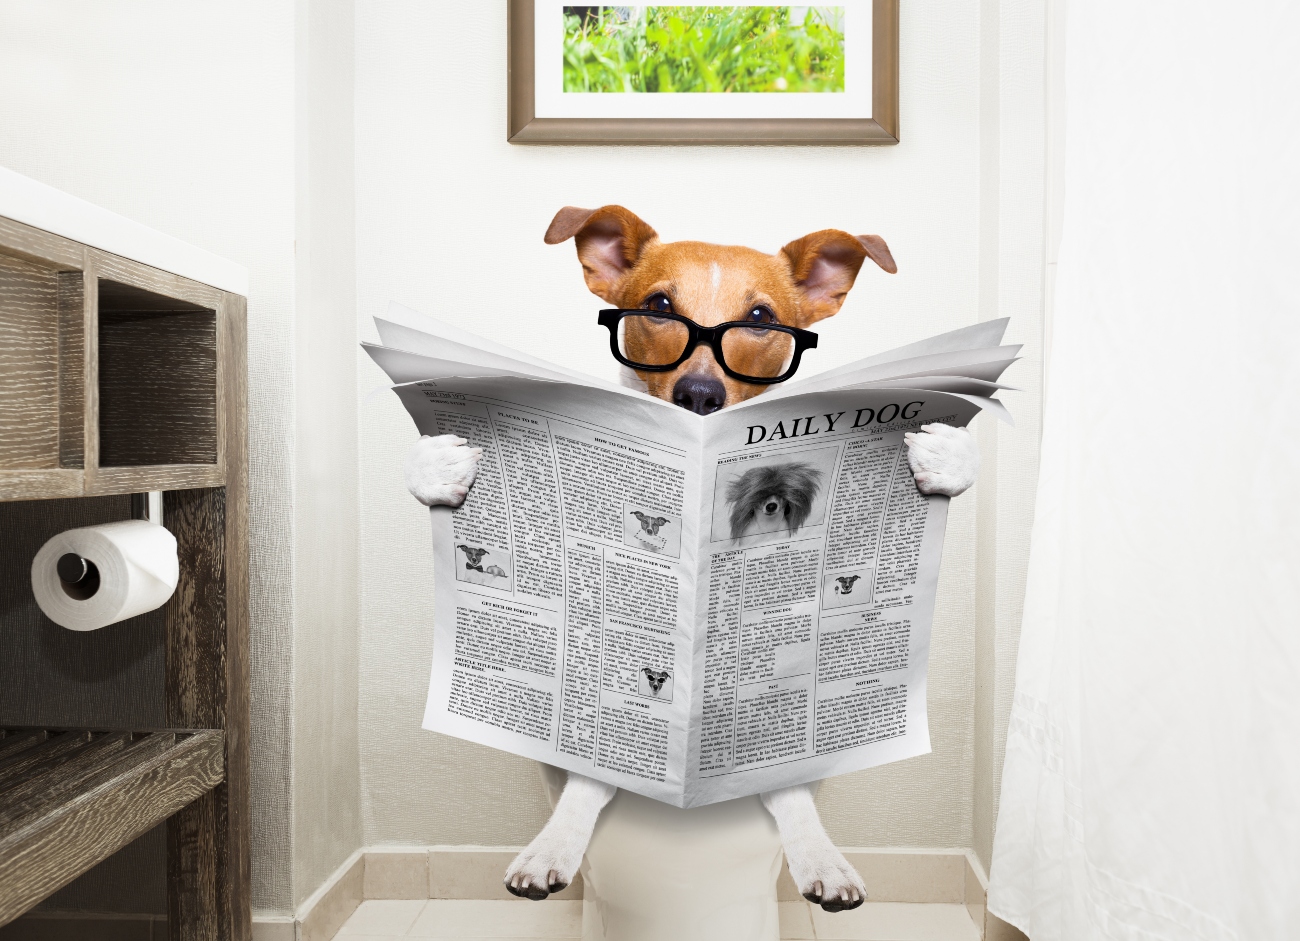 dog reading newspaper on toilet